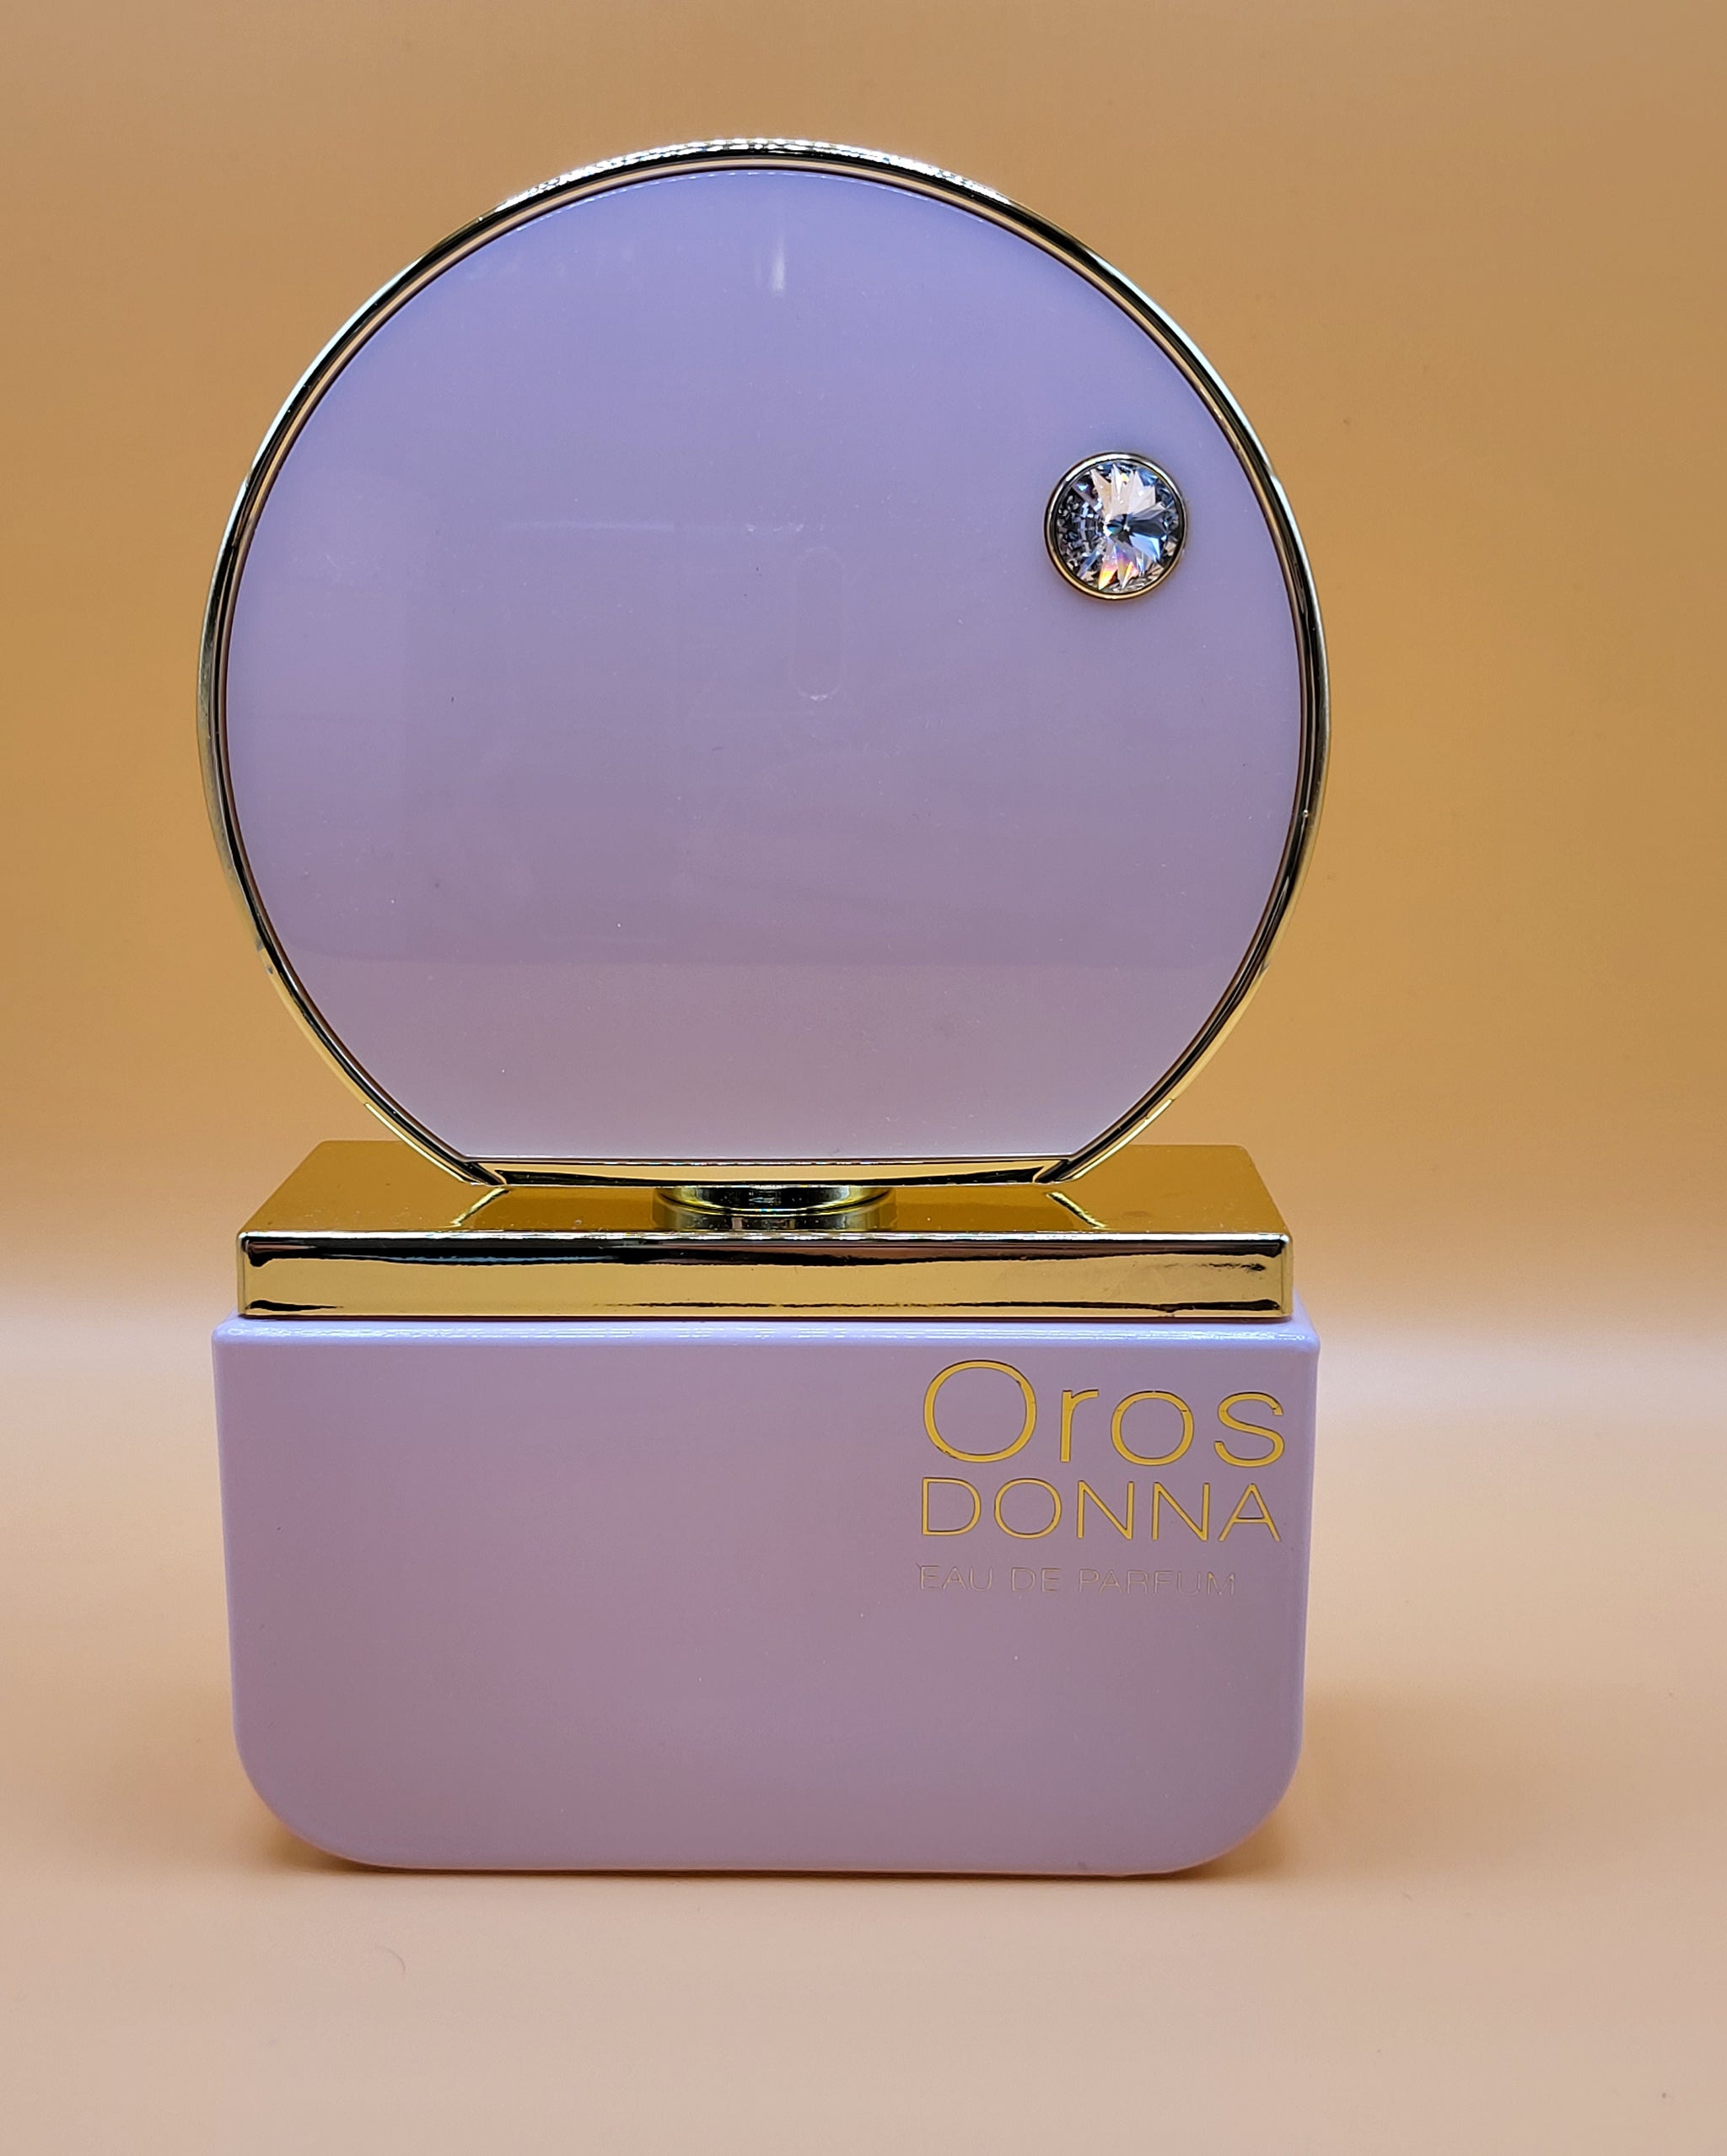 Oros Donna by Armaf for Women 3.4 Oz / 100ml Eau de Parfum Made with Crystals from Swarovski